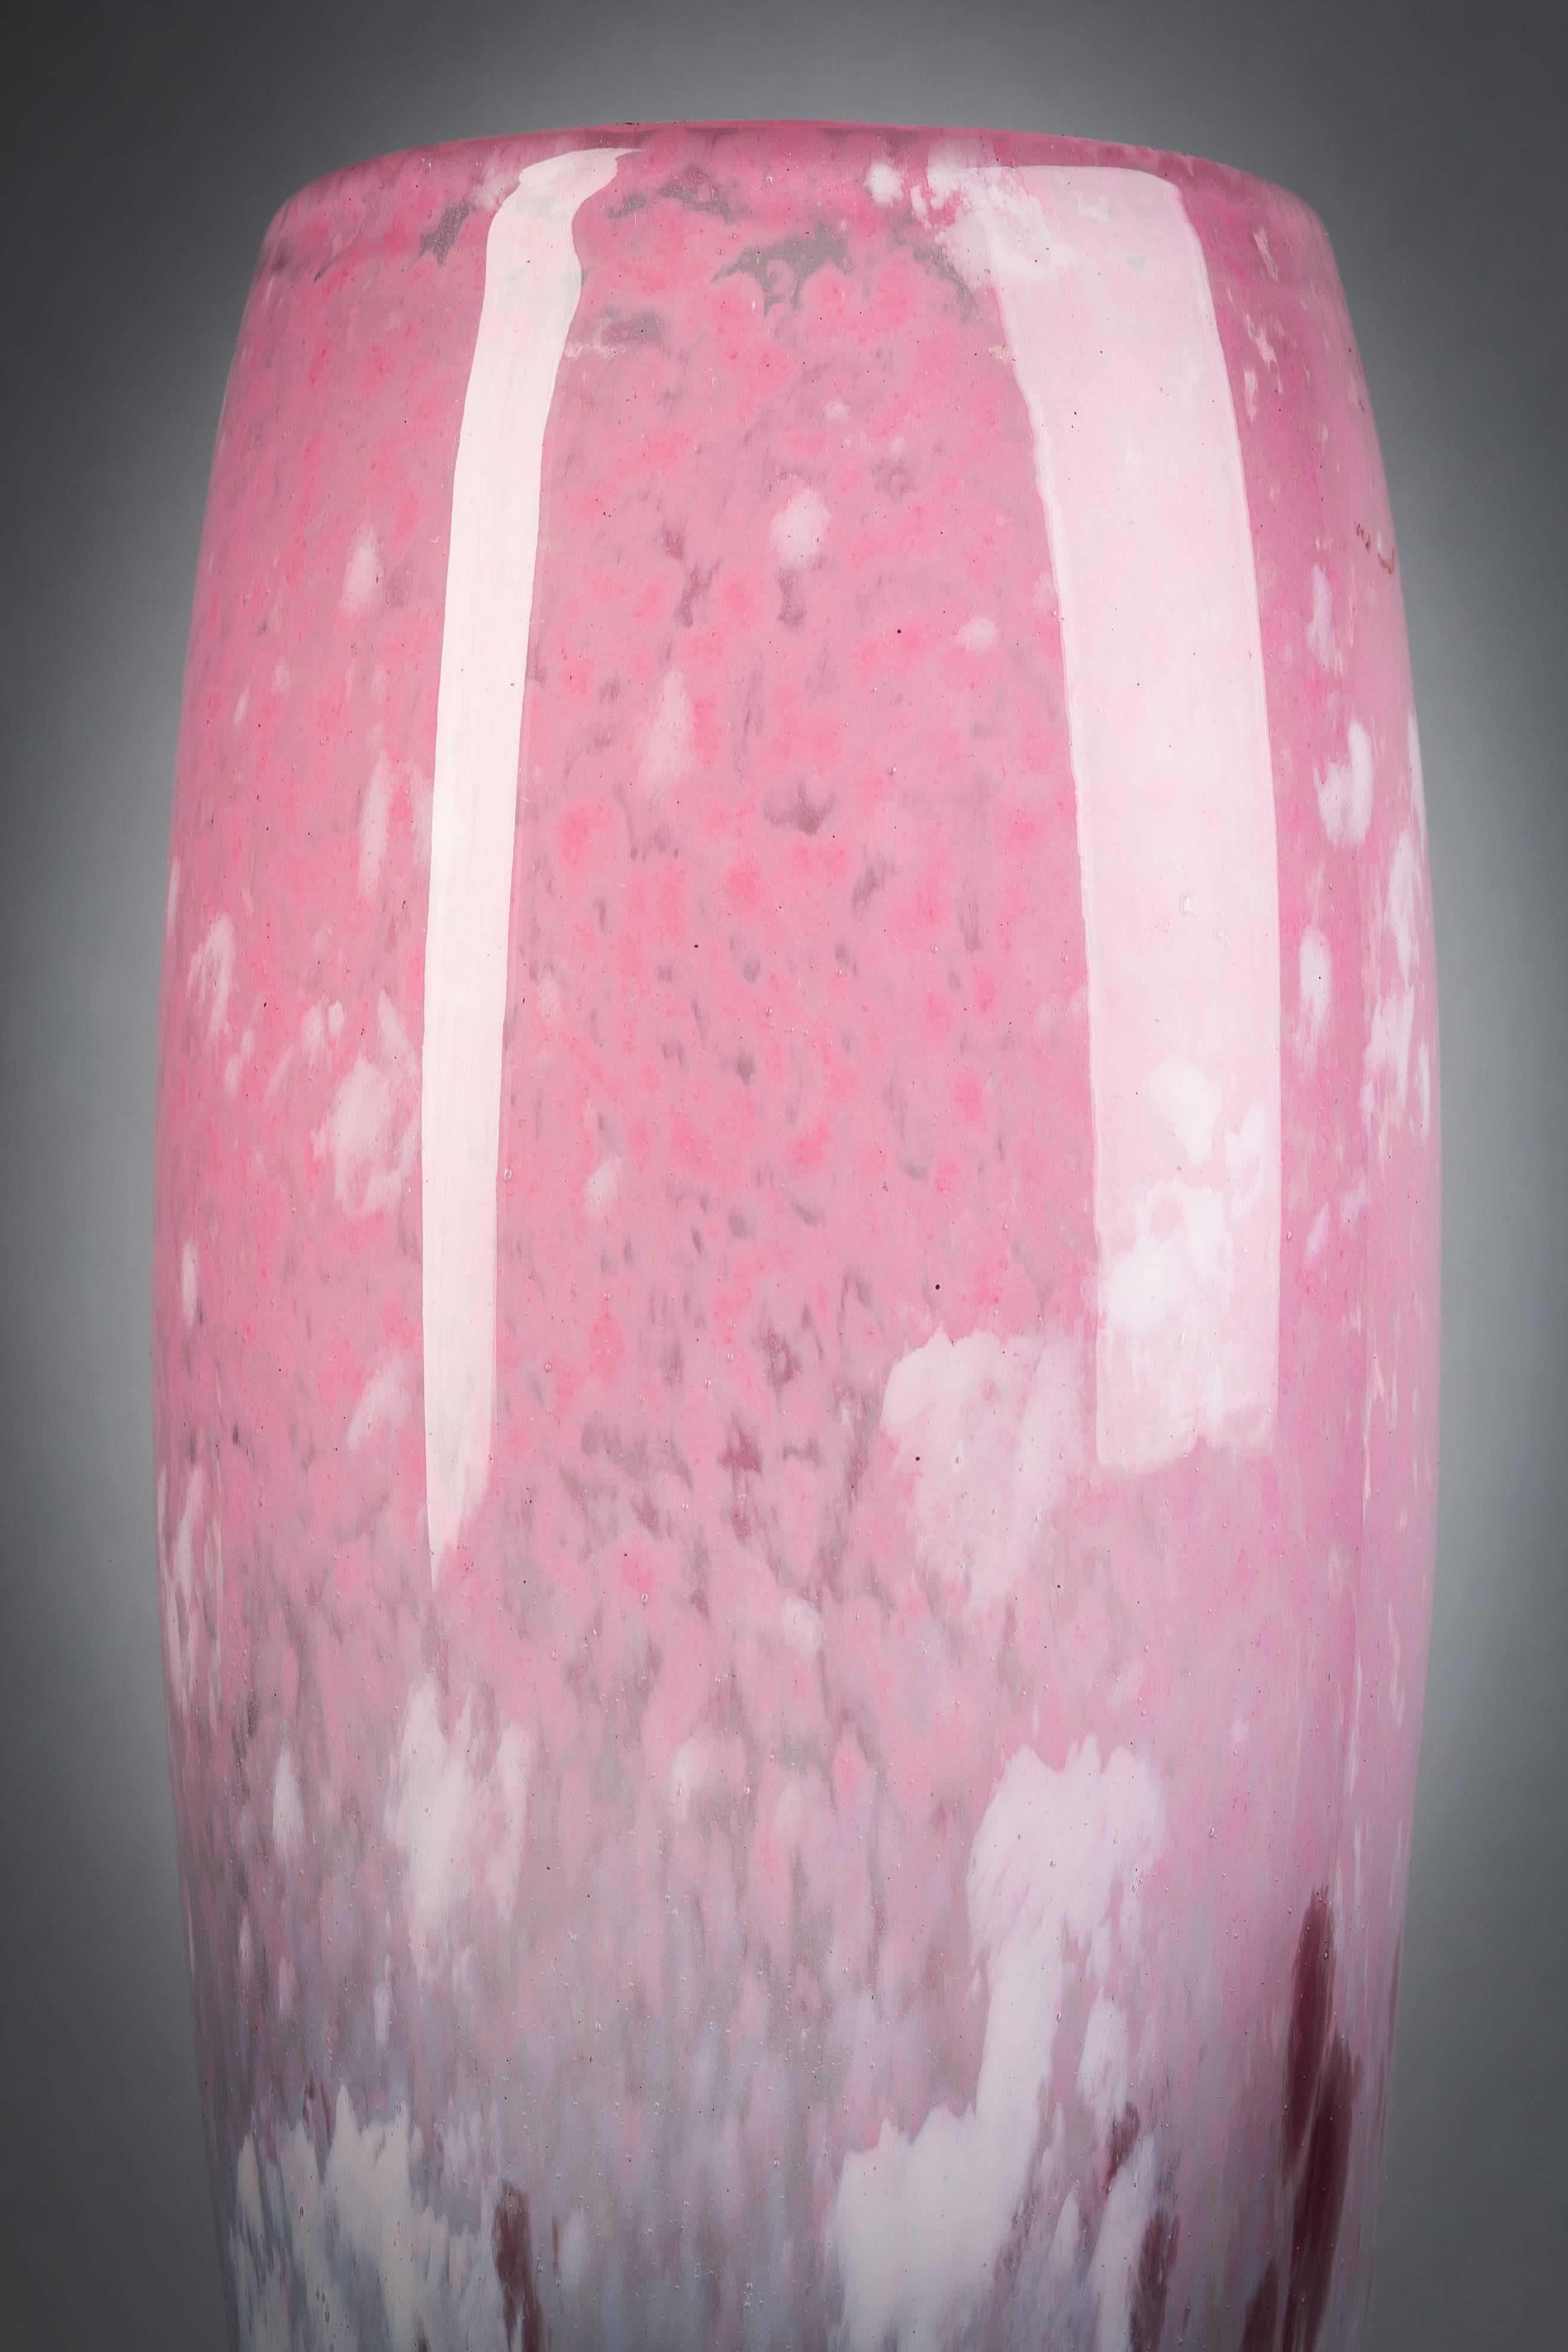 Schneider glass vase, circa 1910.

Internally decorated pink, white and blue.